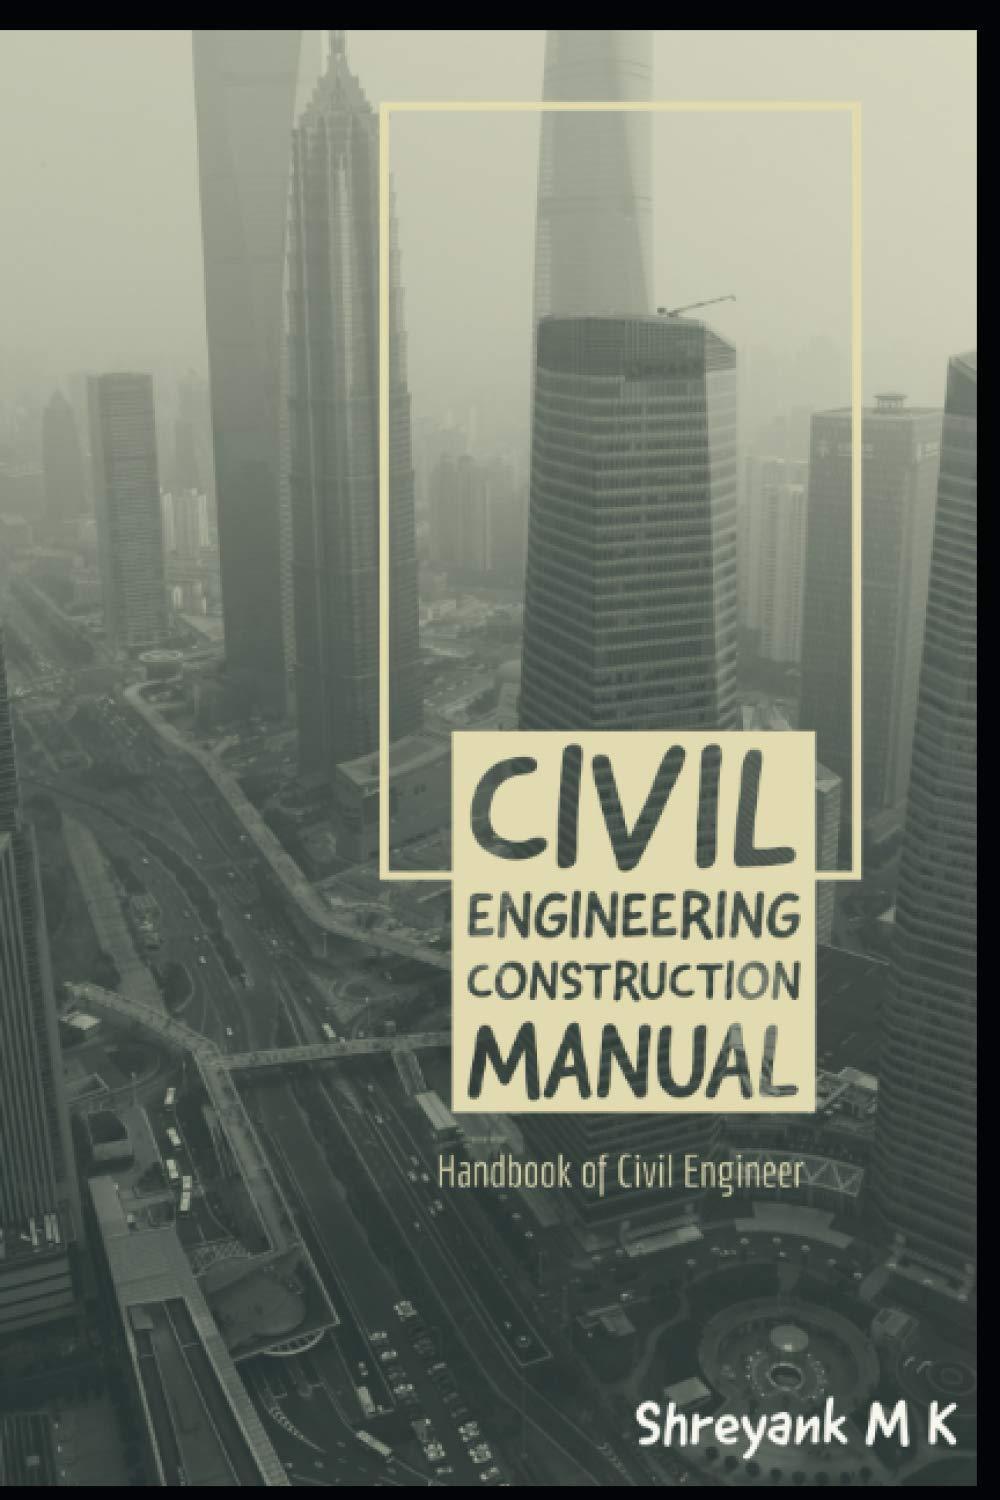 civil engineering construction manual handbook of civil engineer 1st edition shreyank m k b08zvwpgf8,